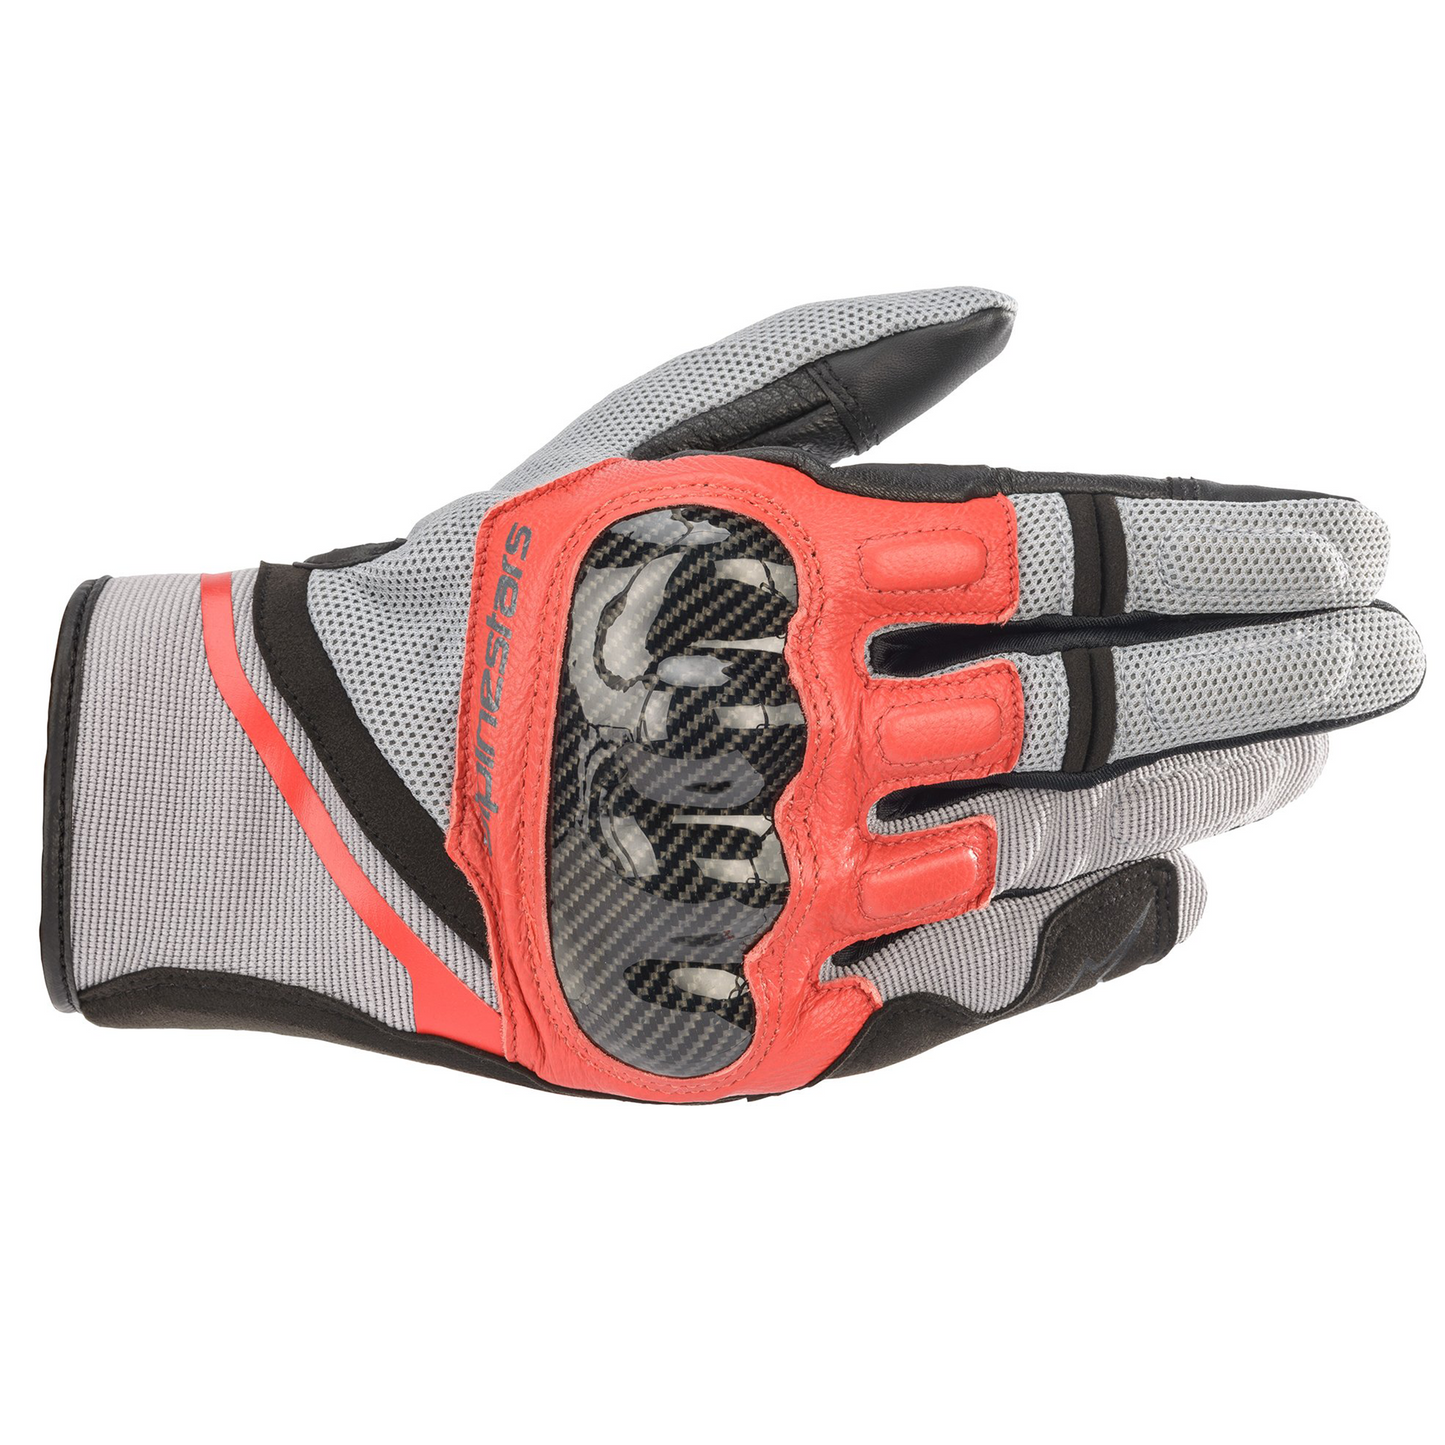 Alpinestars Chrome Gloves - Ash Grey/Black/Bright Red